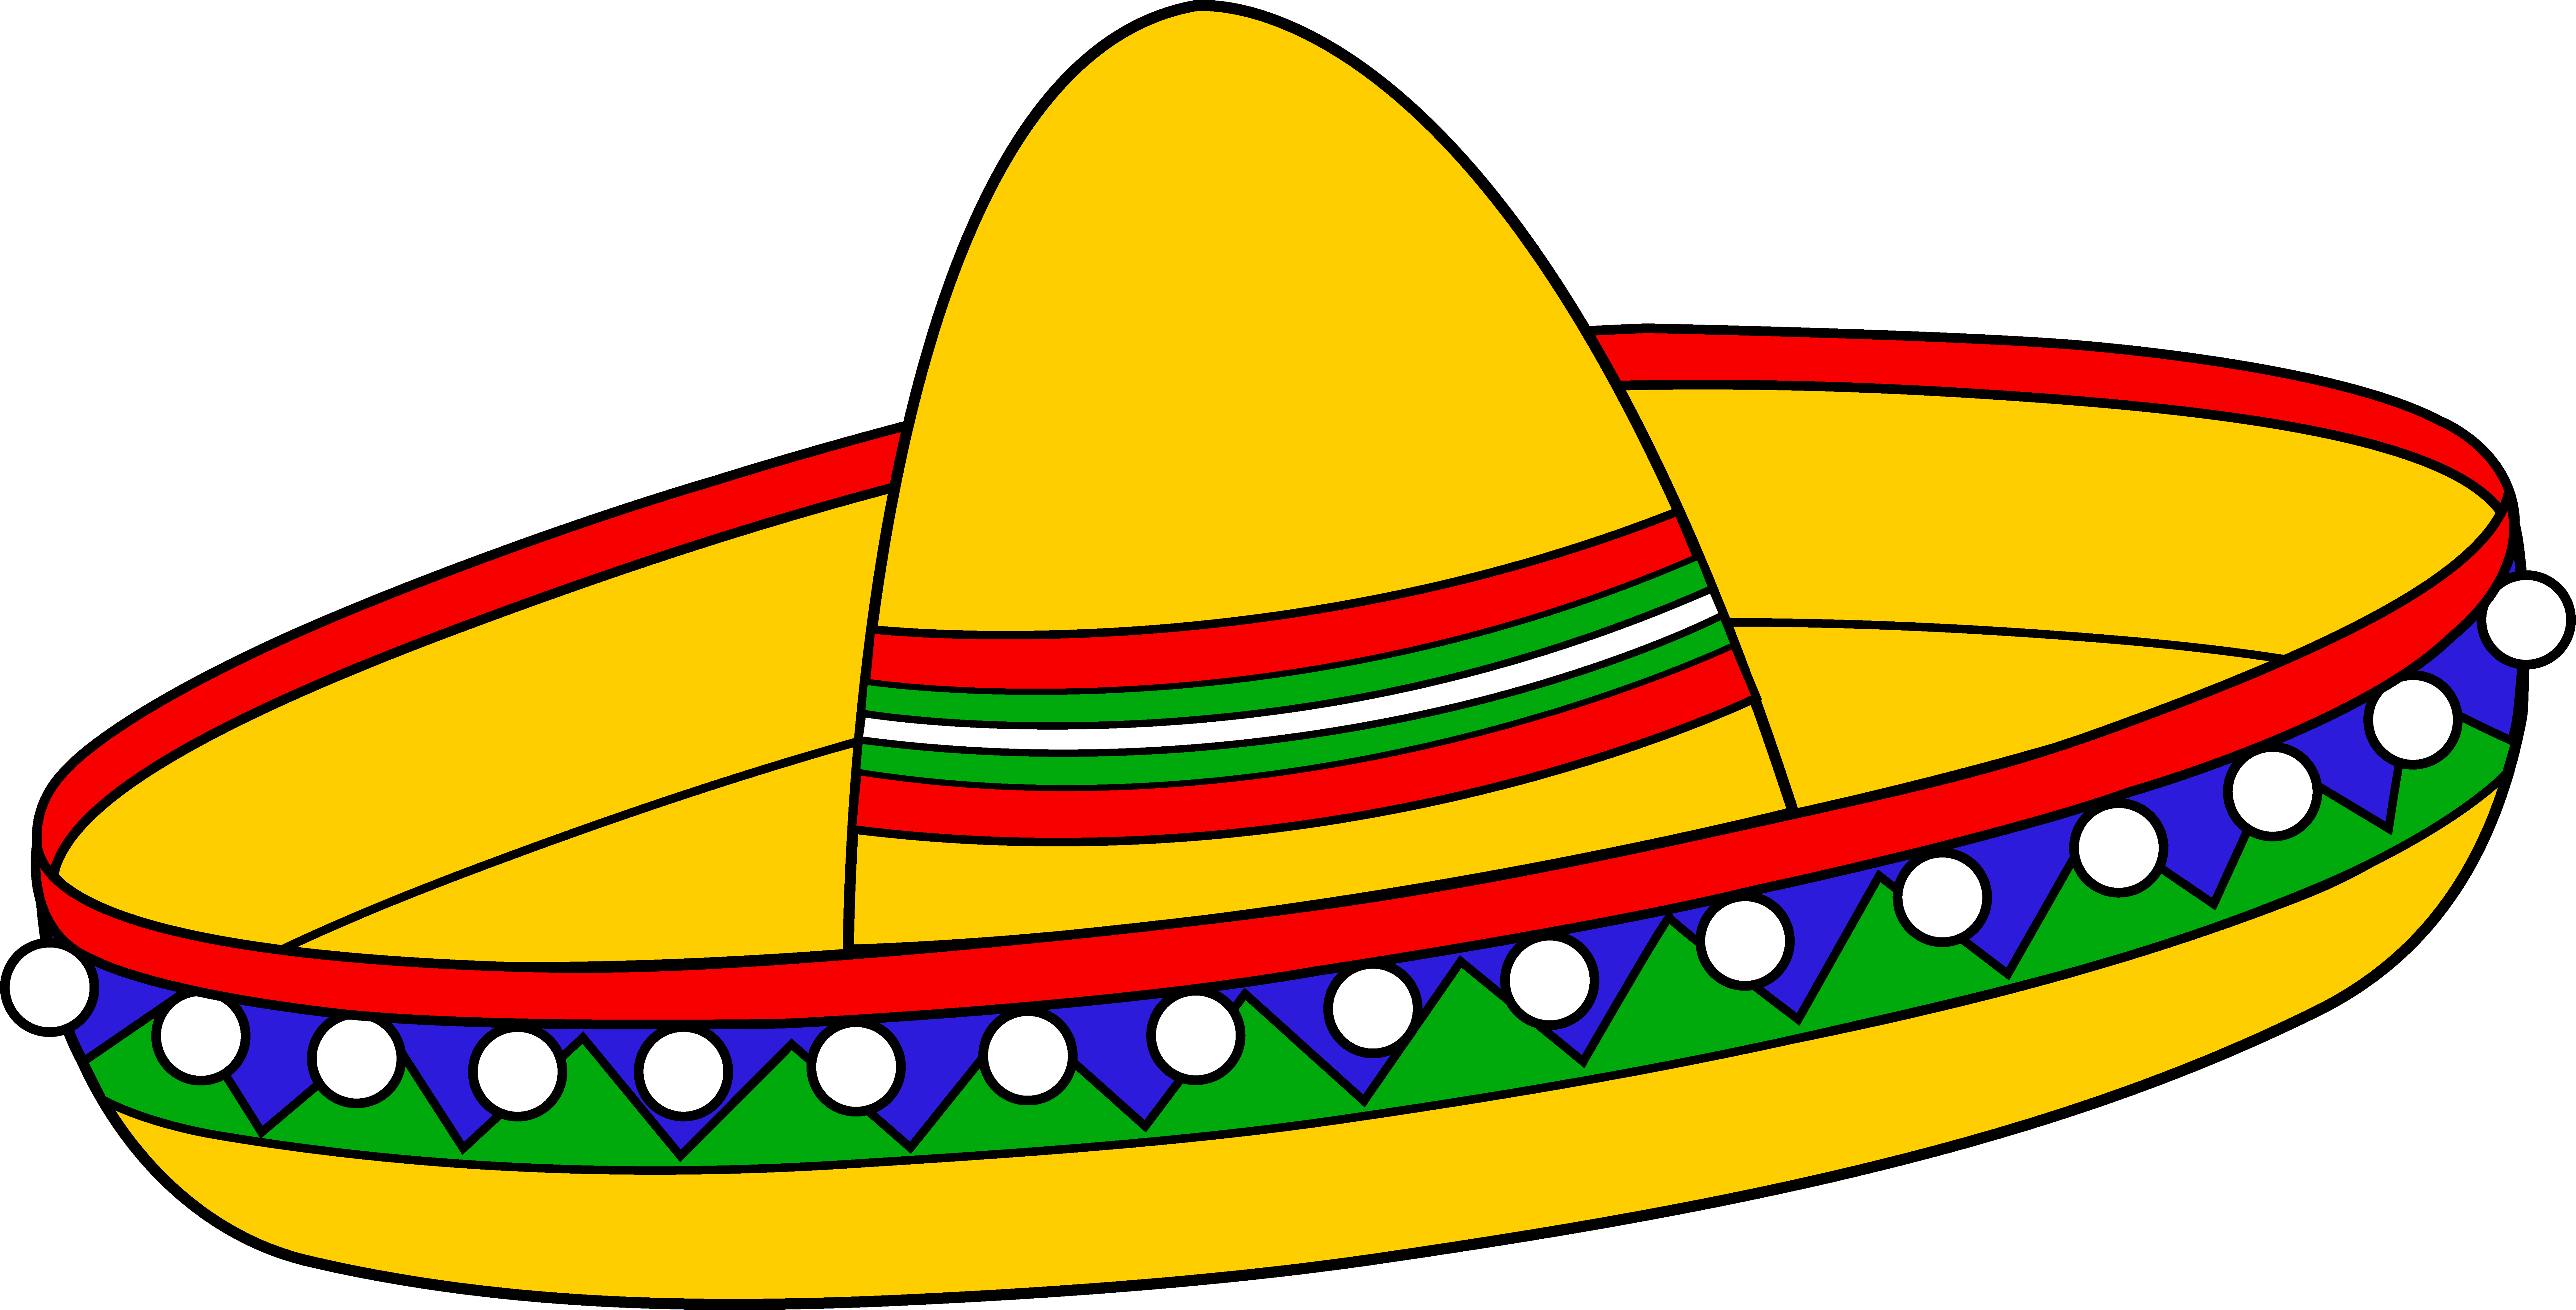 Cartoon Sombrero Mexicano Clipart - Free to use Clip Art Resource